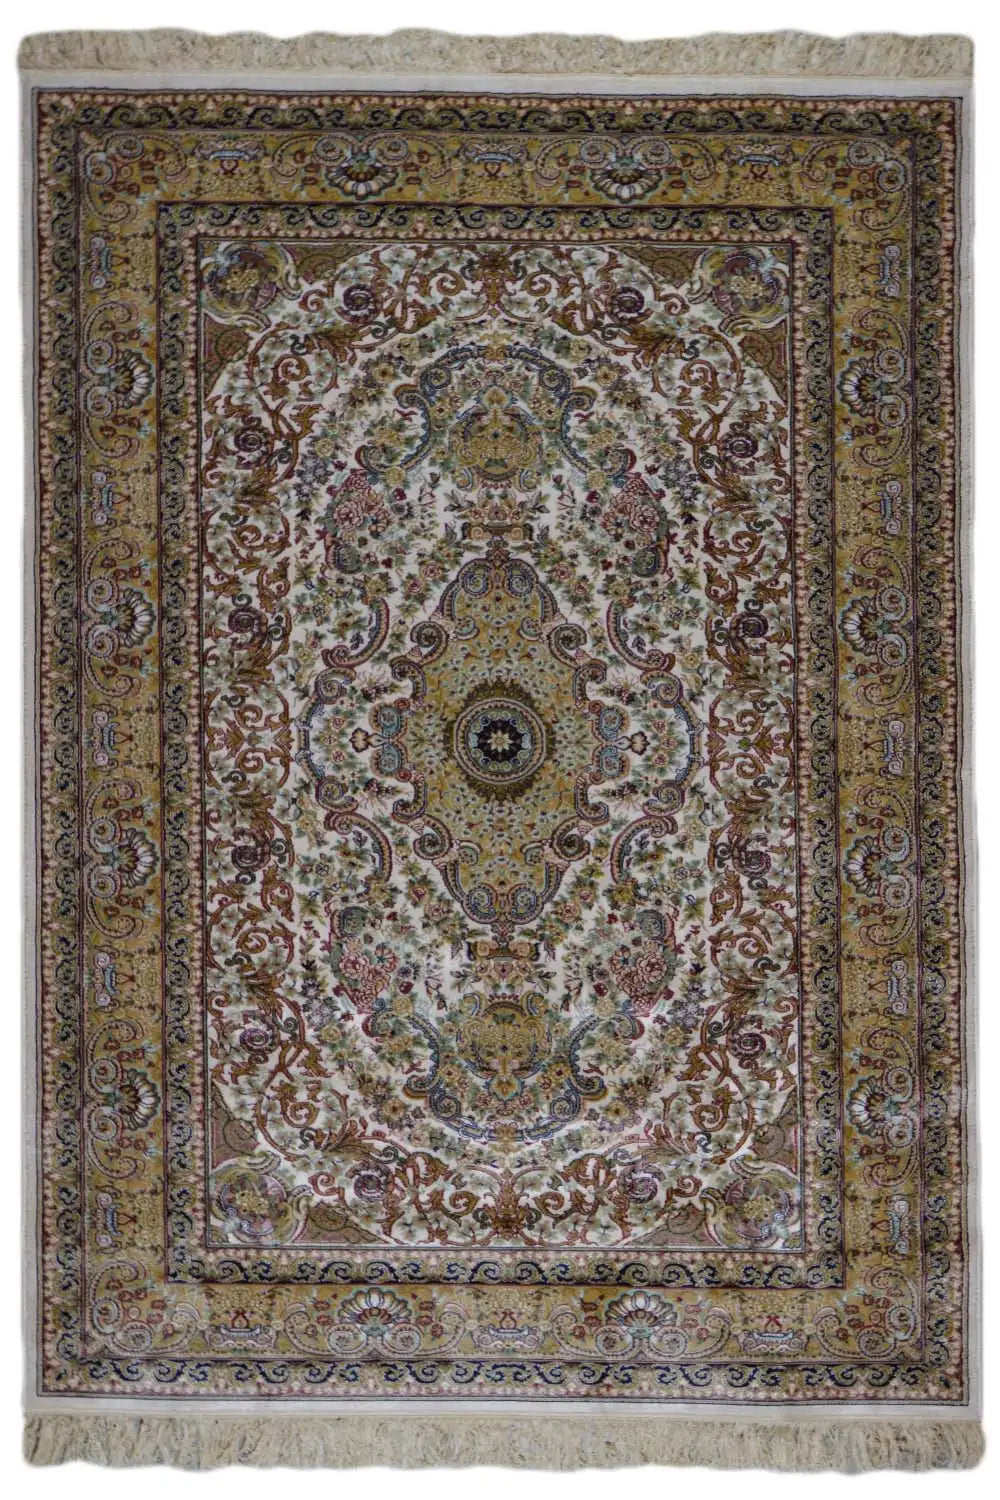 Maschine Teppich - 115631 (225x150cm) - German Carpet Shop